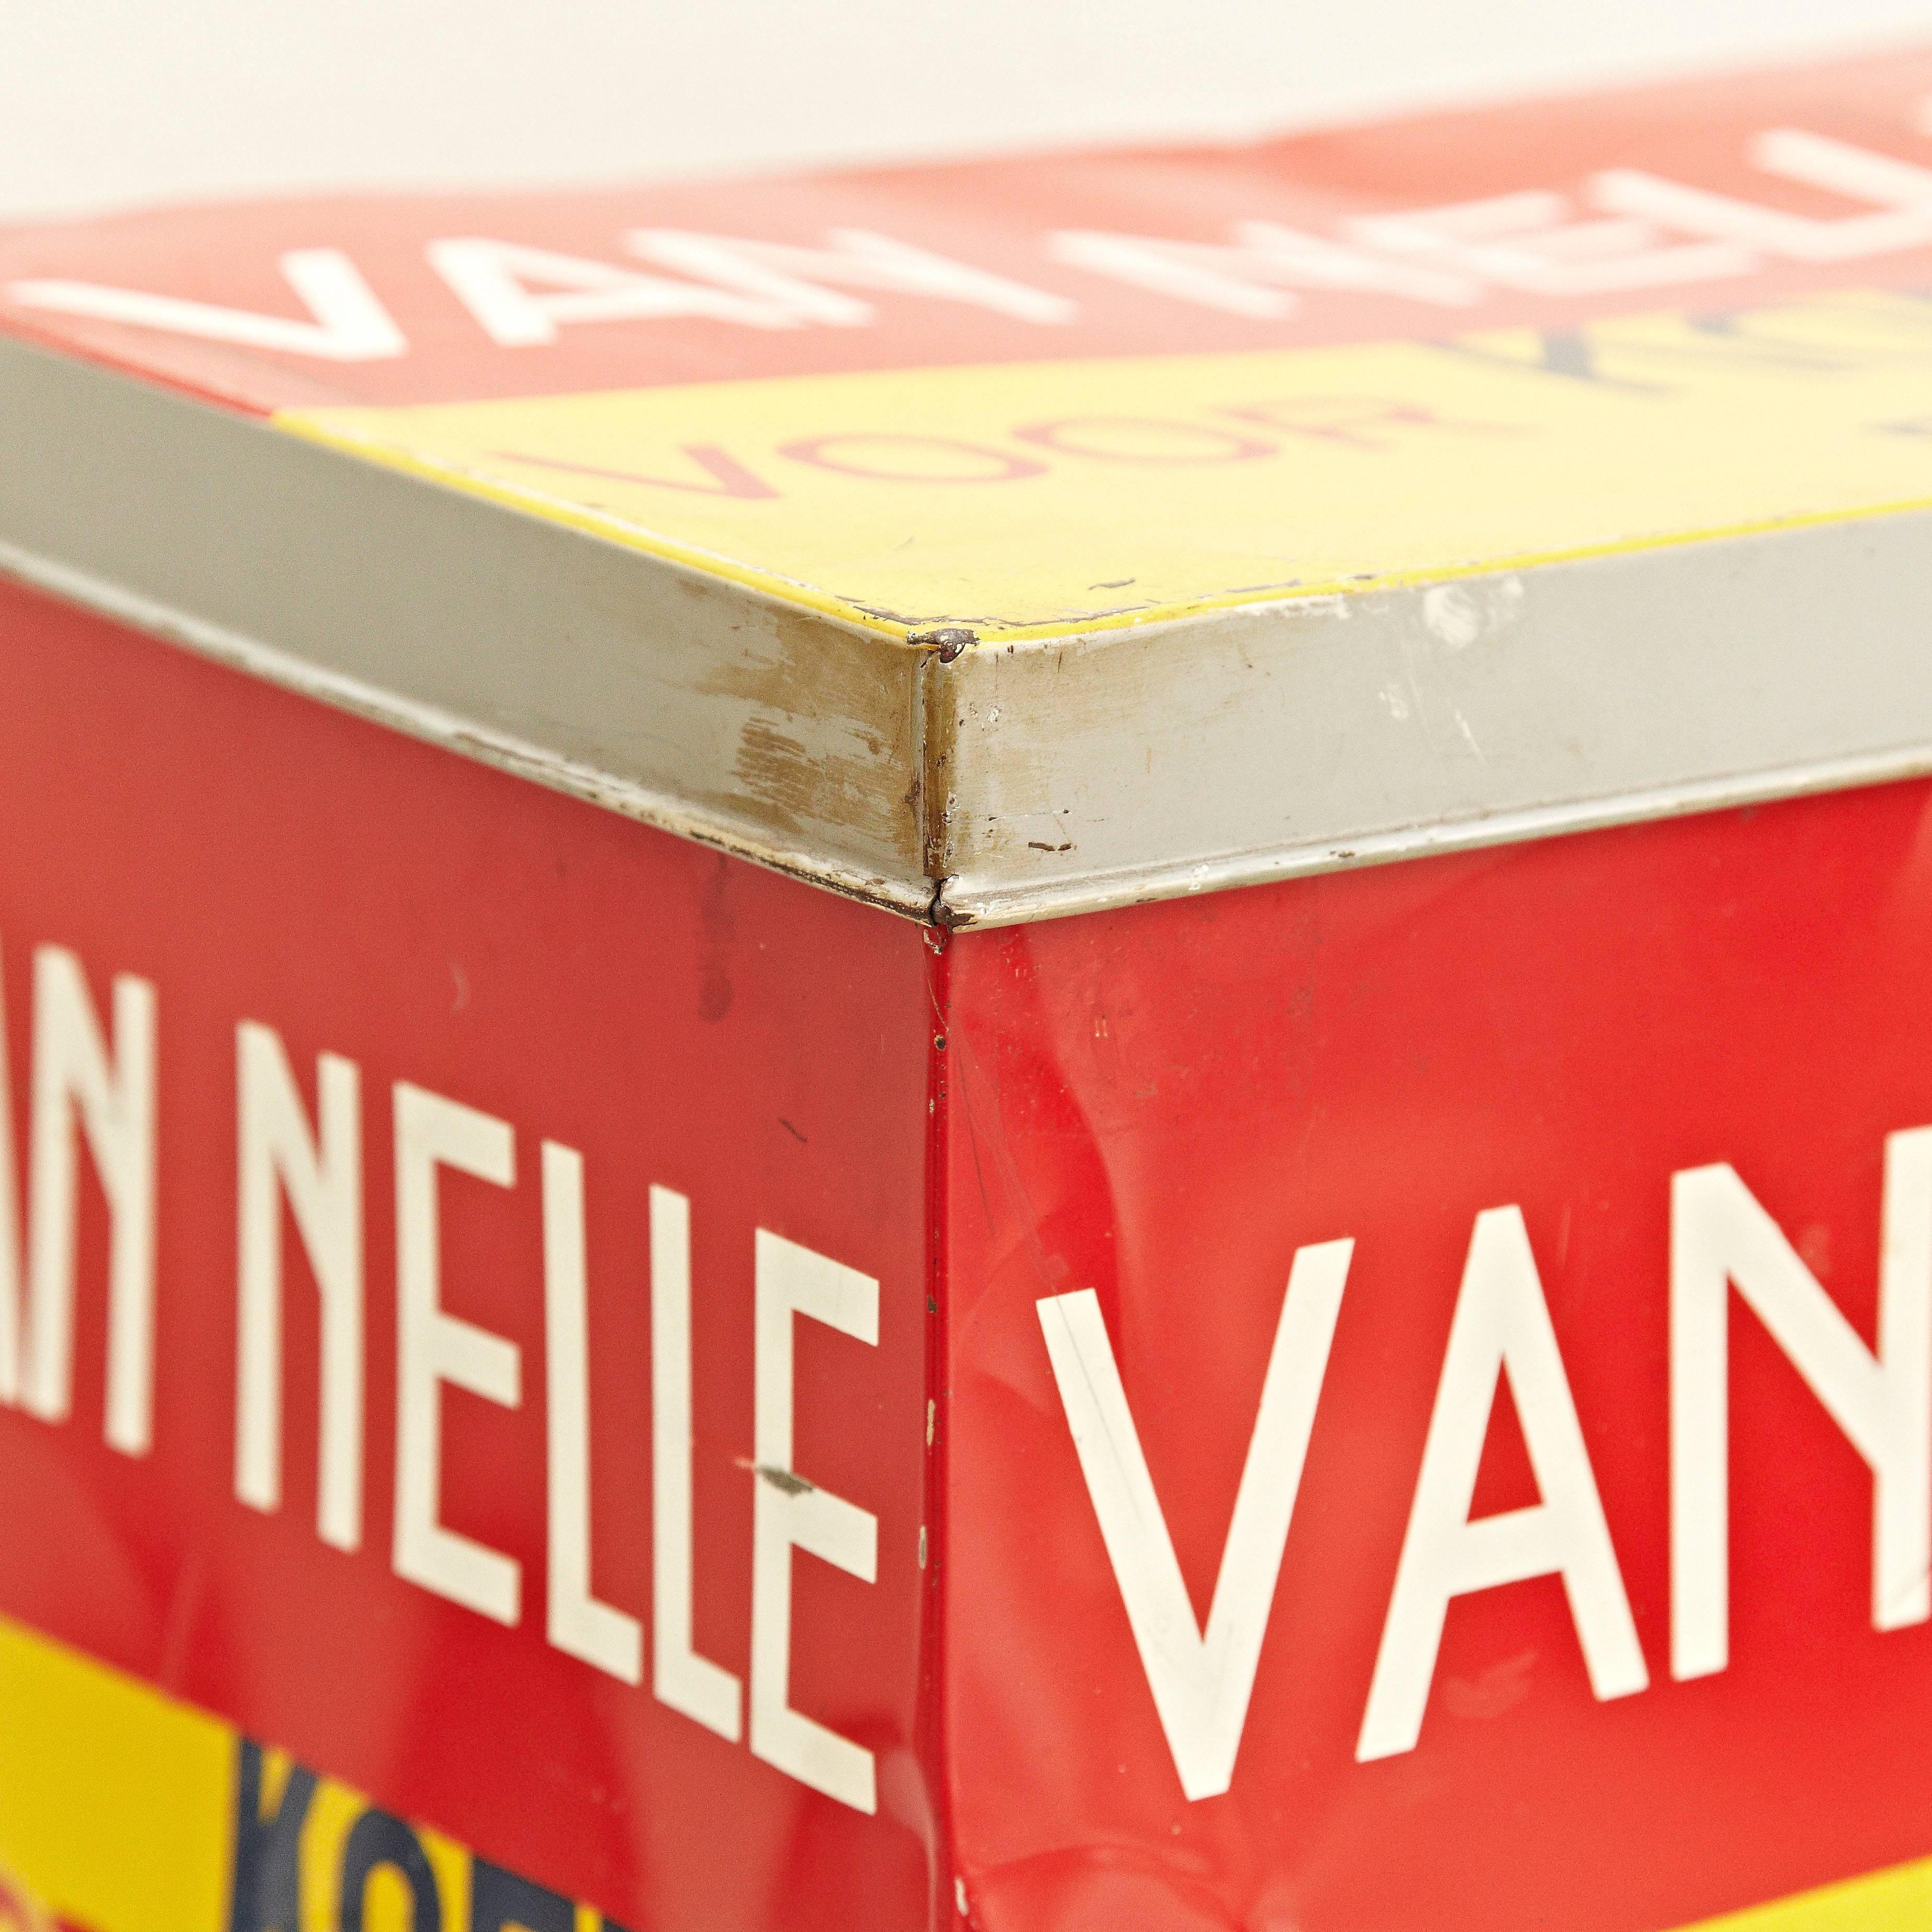 Dutch Van Nelle Tea Box by Jacques Jongert, circa 1930